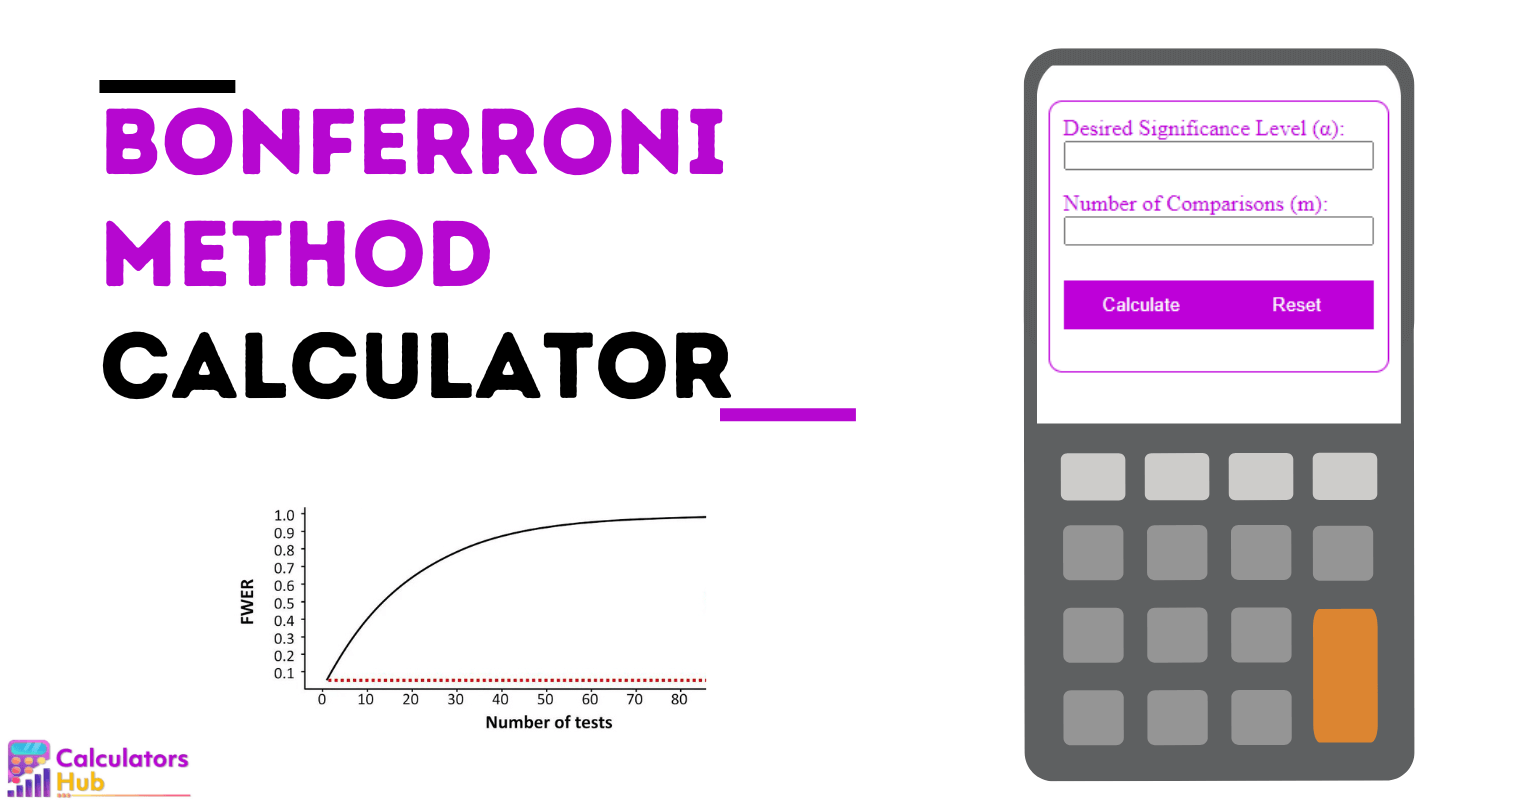 Calculadora del método Bonferroni